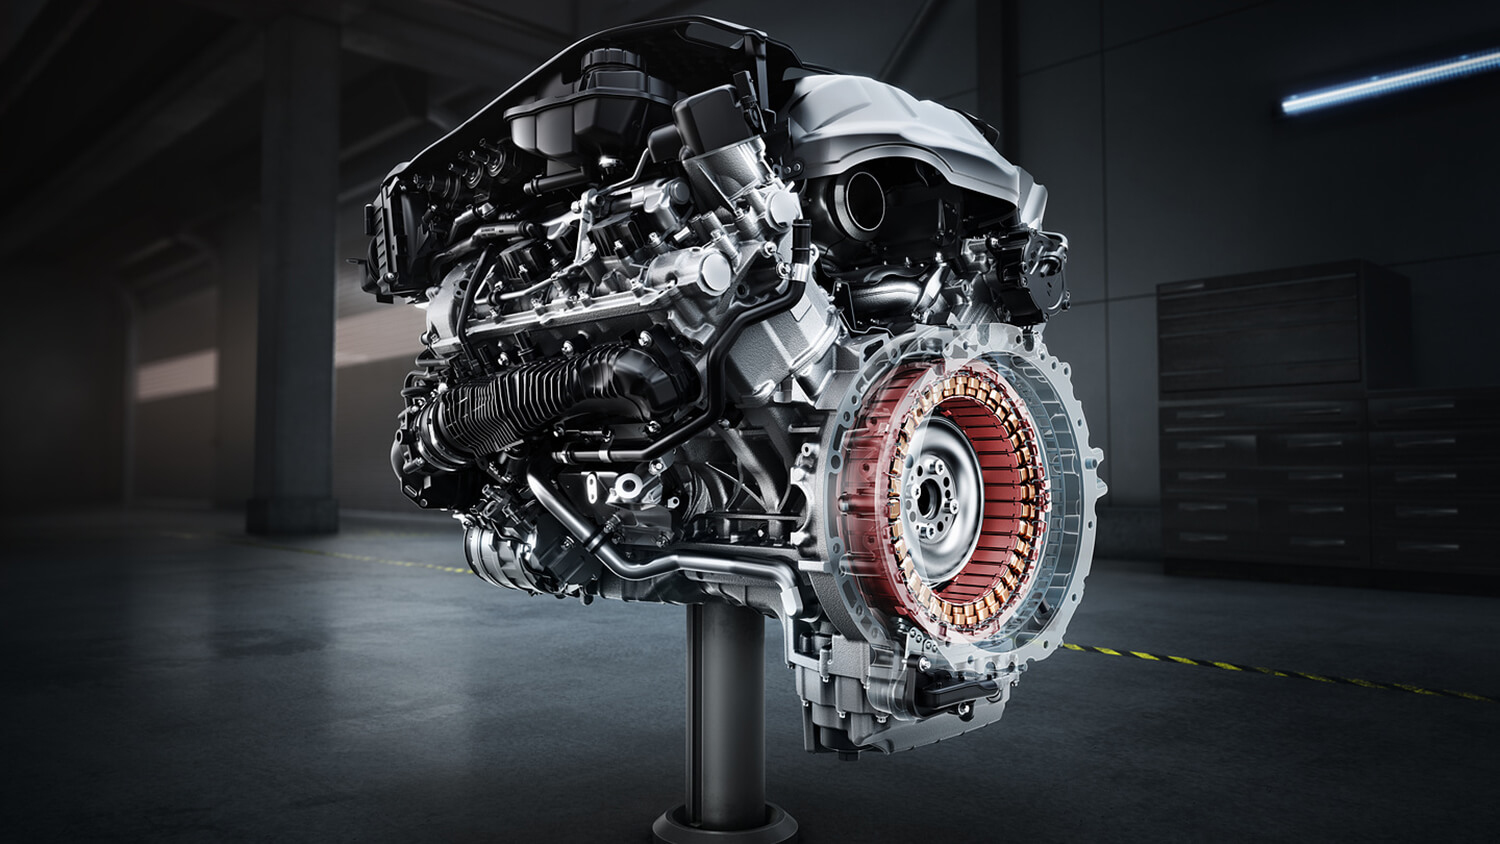 4.0-litre V8 biturbo engine